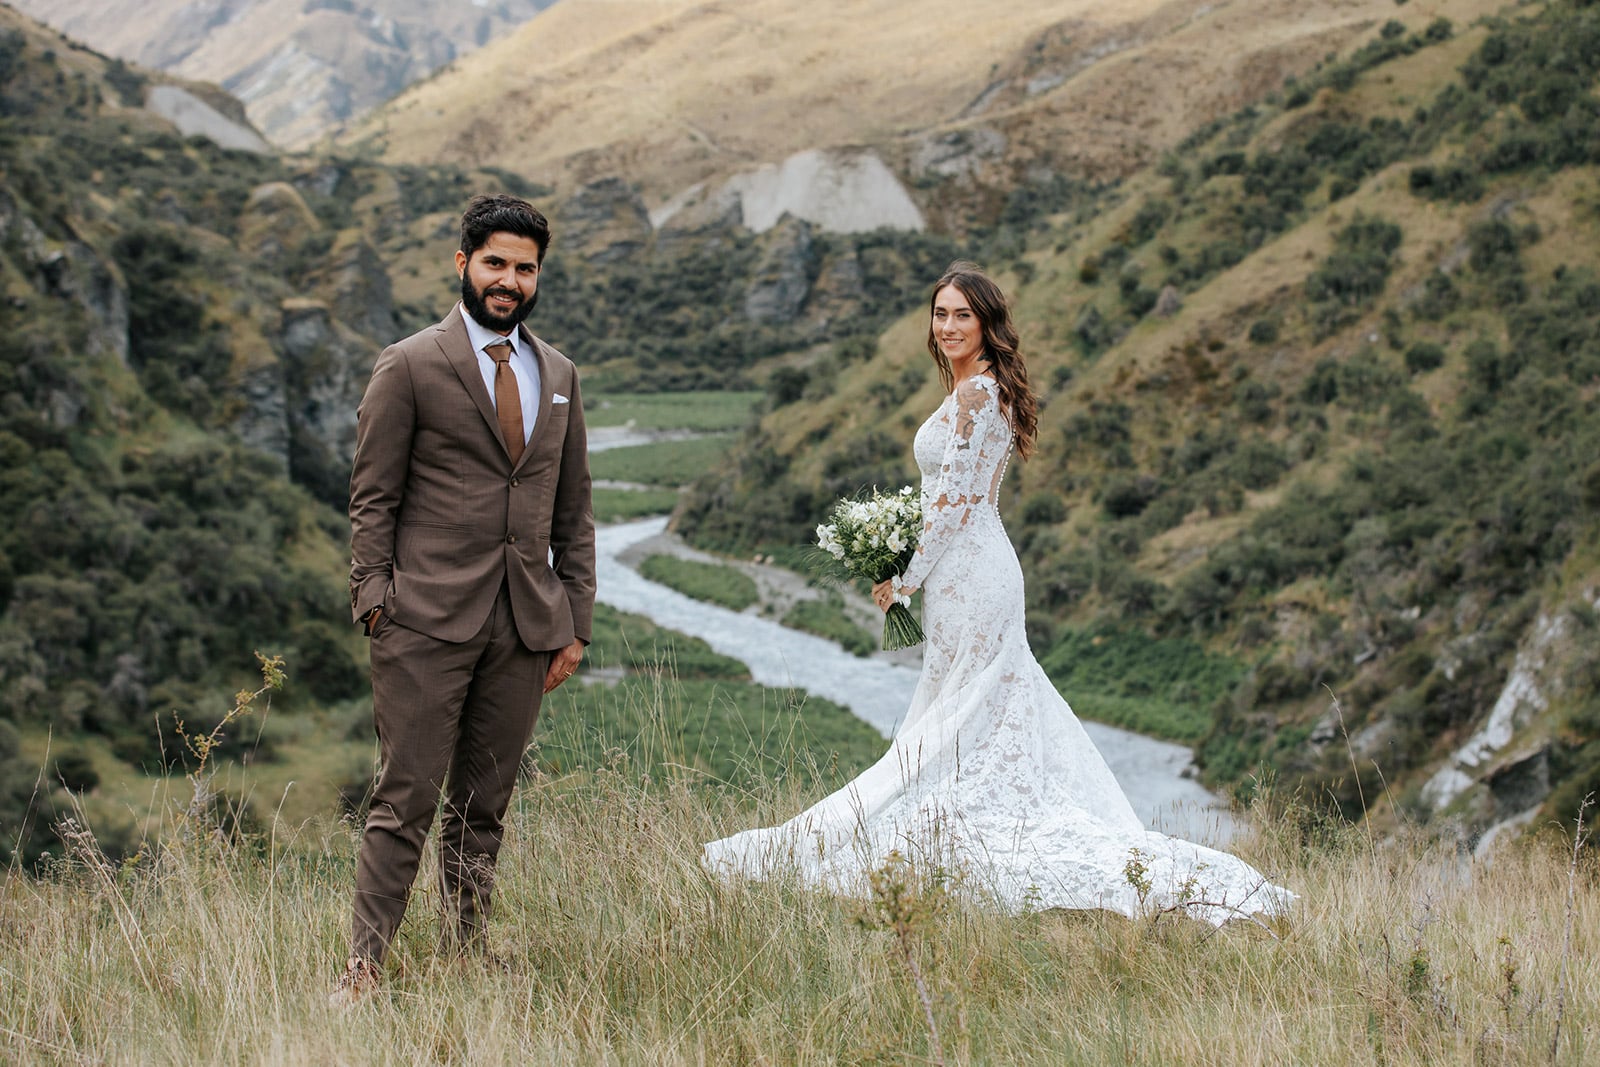 Adventure Wedding in Queenstown New Zealand with helicopter